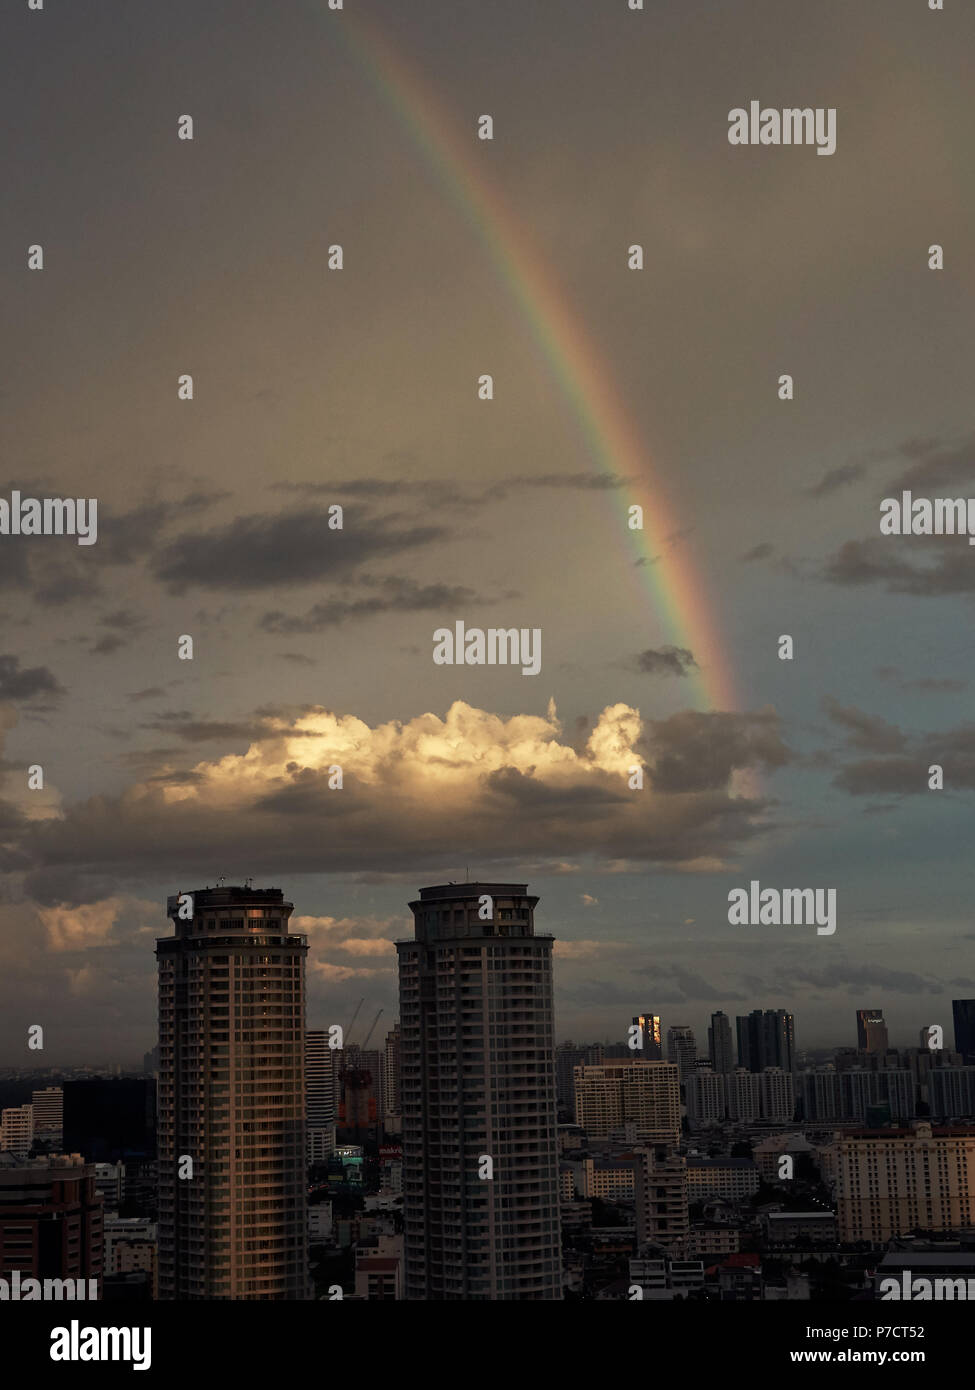 Rainbow Coloured String Background, Bangkok, Thailand Stock Photo, Picture  and Royalty Free Image. Image 23763146.